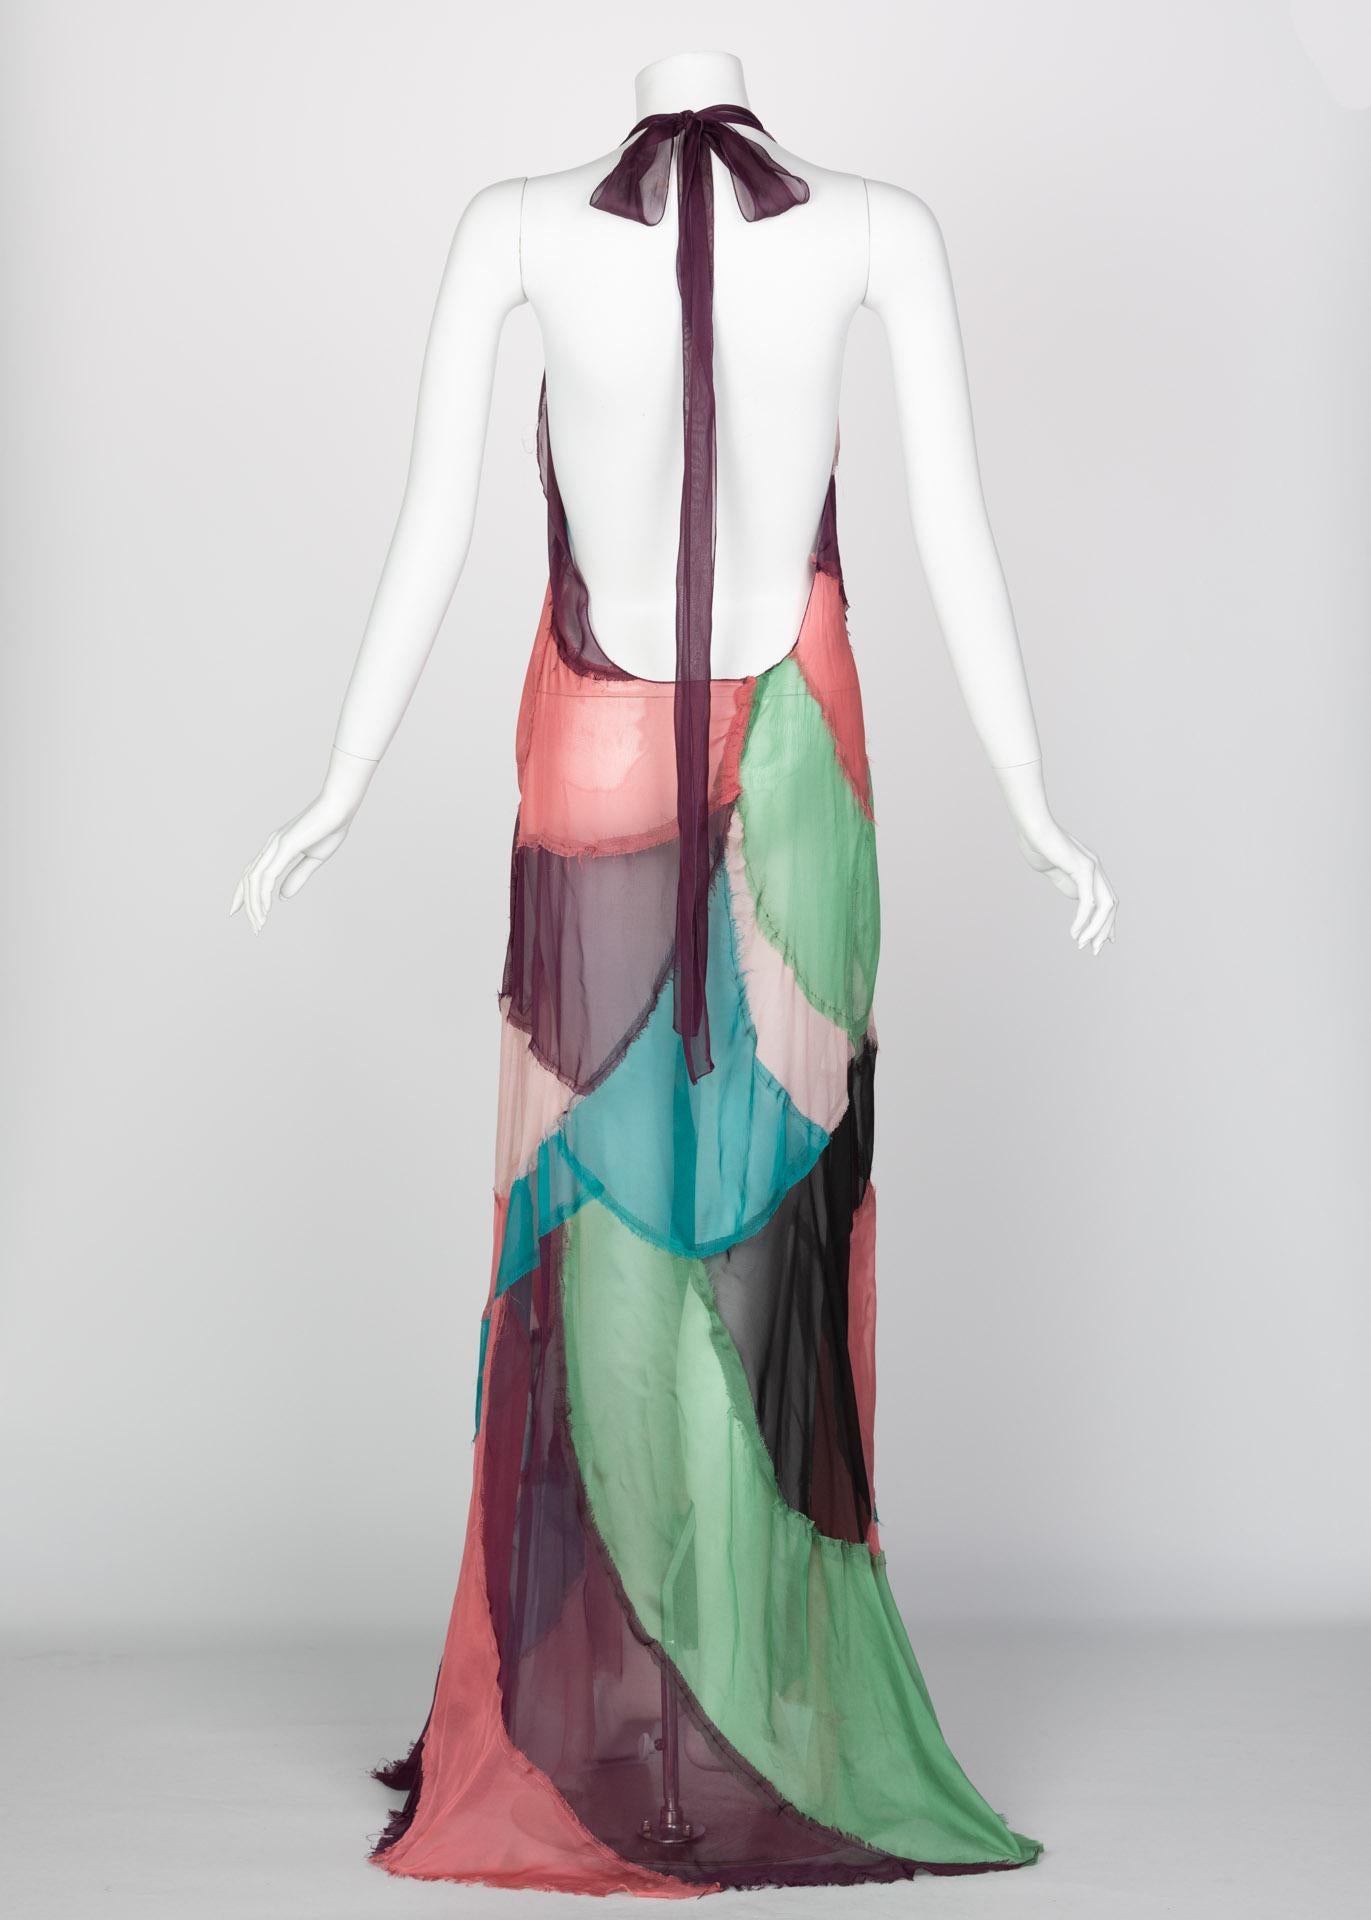 Alberta Ferretti Silk Chiffon Patchwork Open back Halter Gown, 2005 For Sale 2